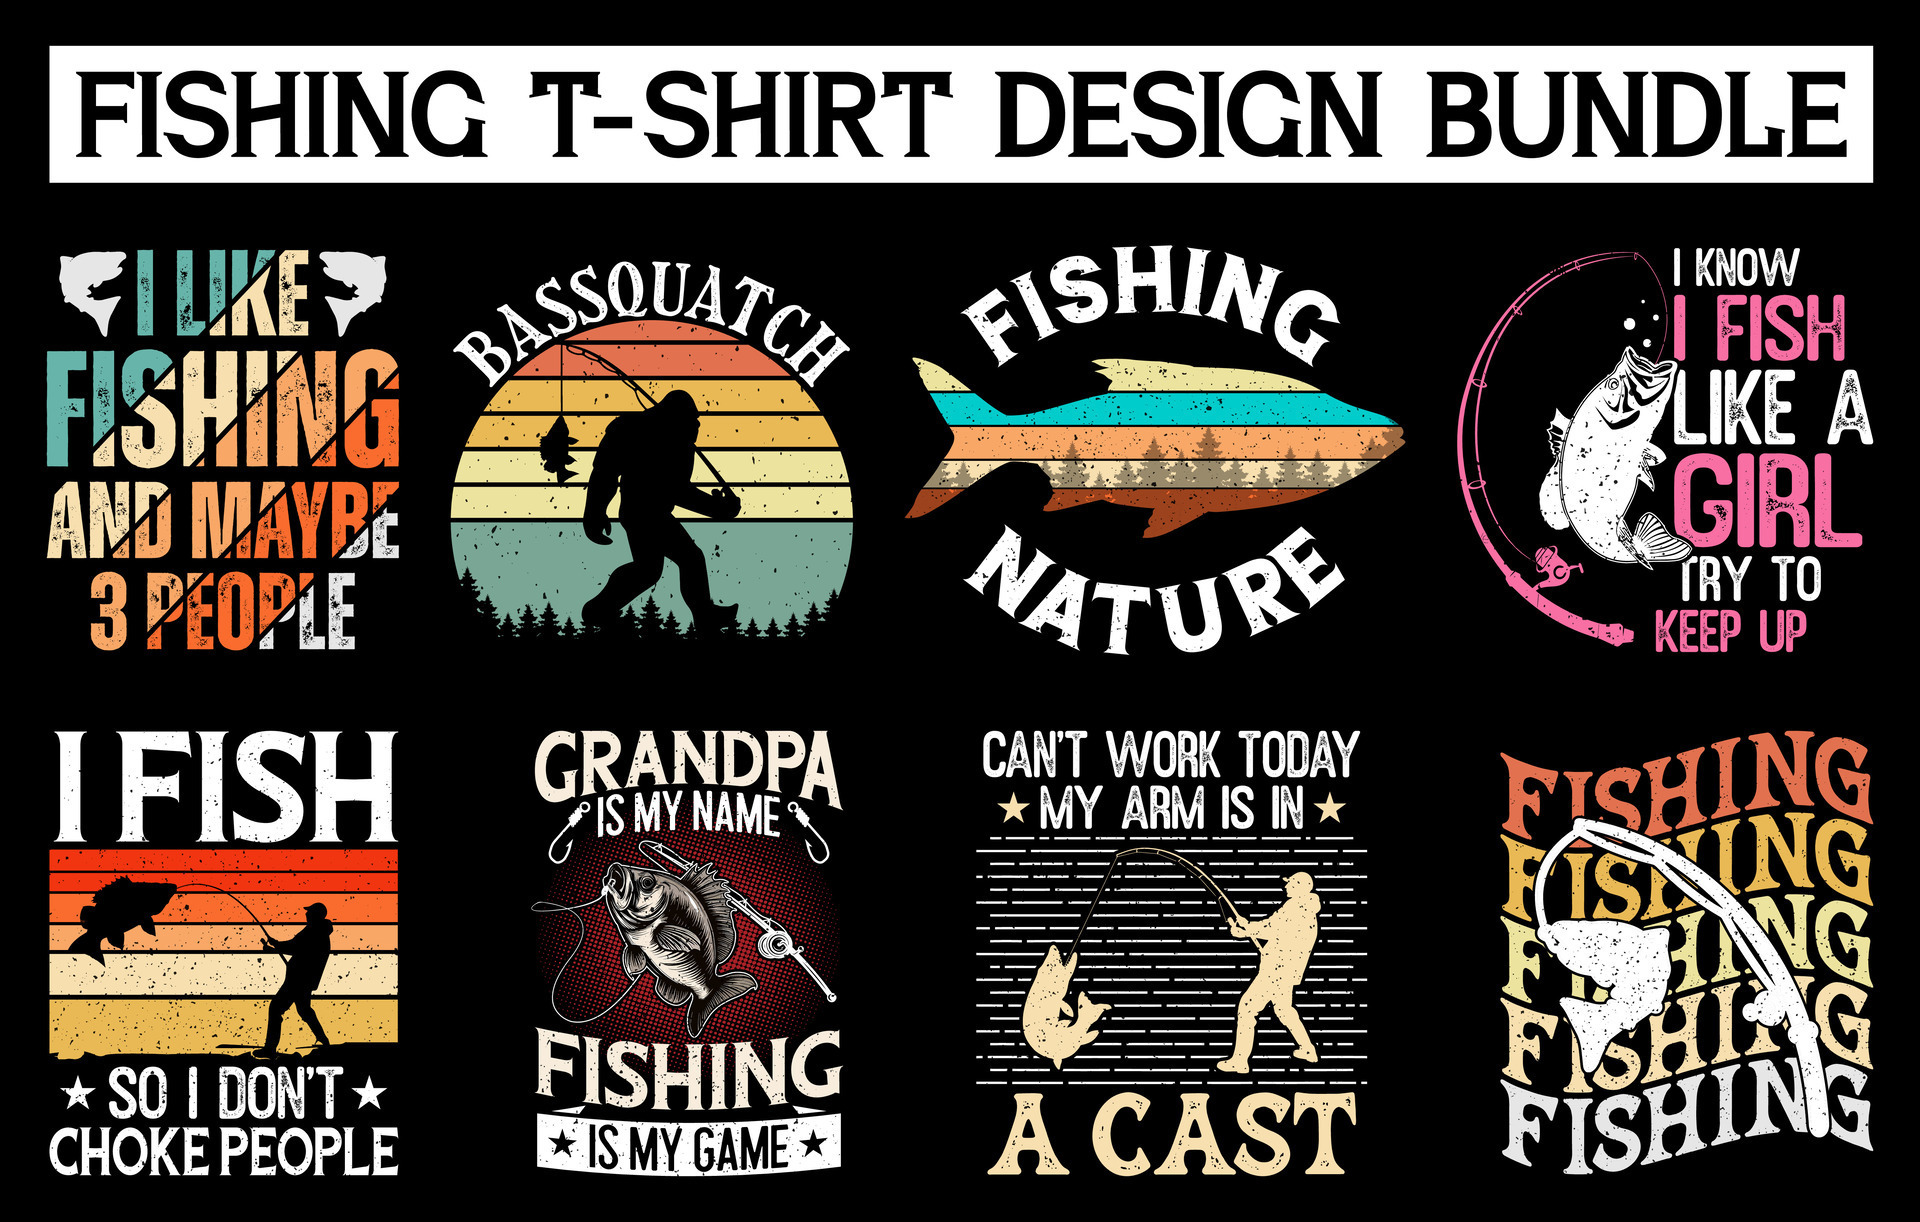 Fishing t shirt design bundle, Fishing vintage t shirt collection